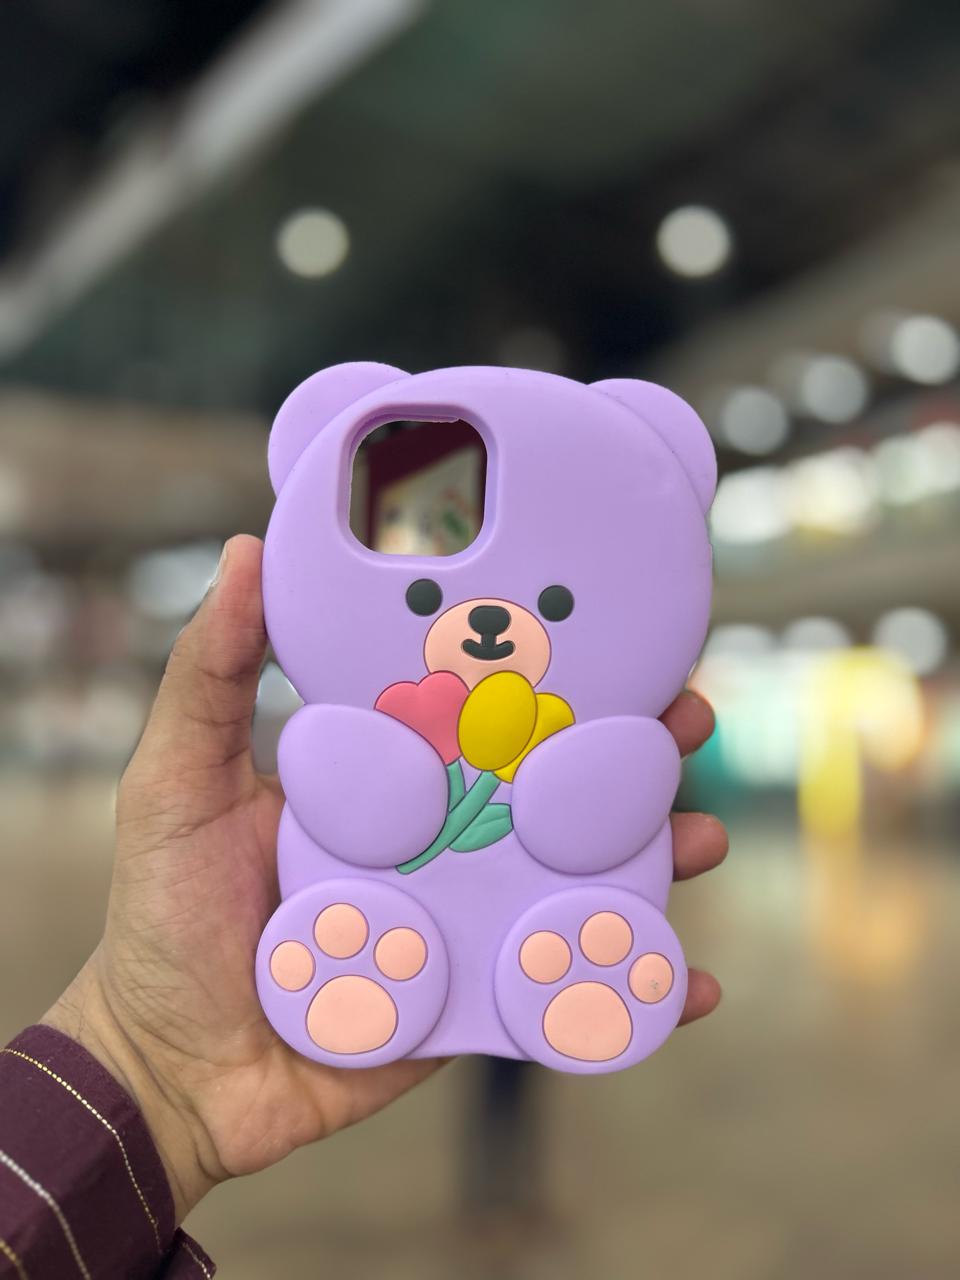 iPhone Cute 3D Cartoon Teddy Silicone Case Cover (Purple)